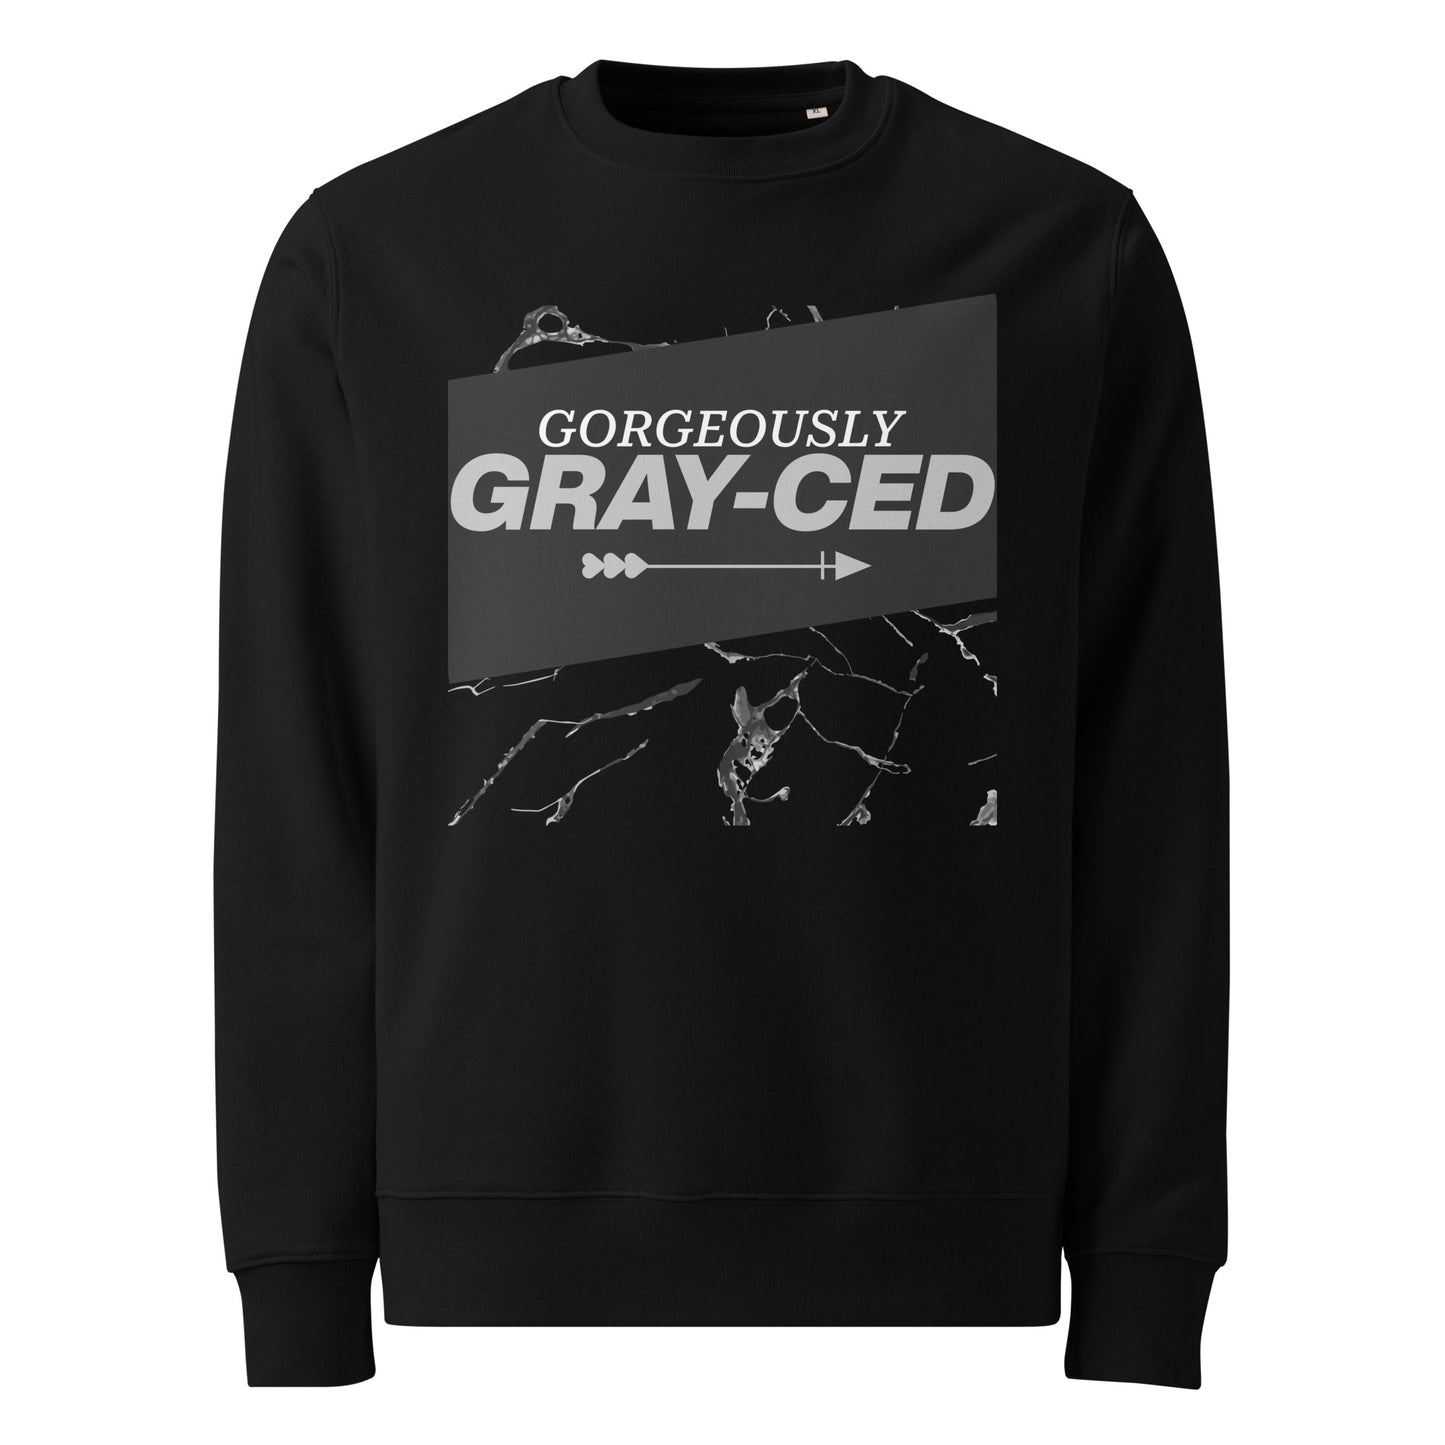 Gorgeously Gray-ced Eco Sweatshirt